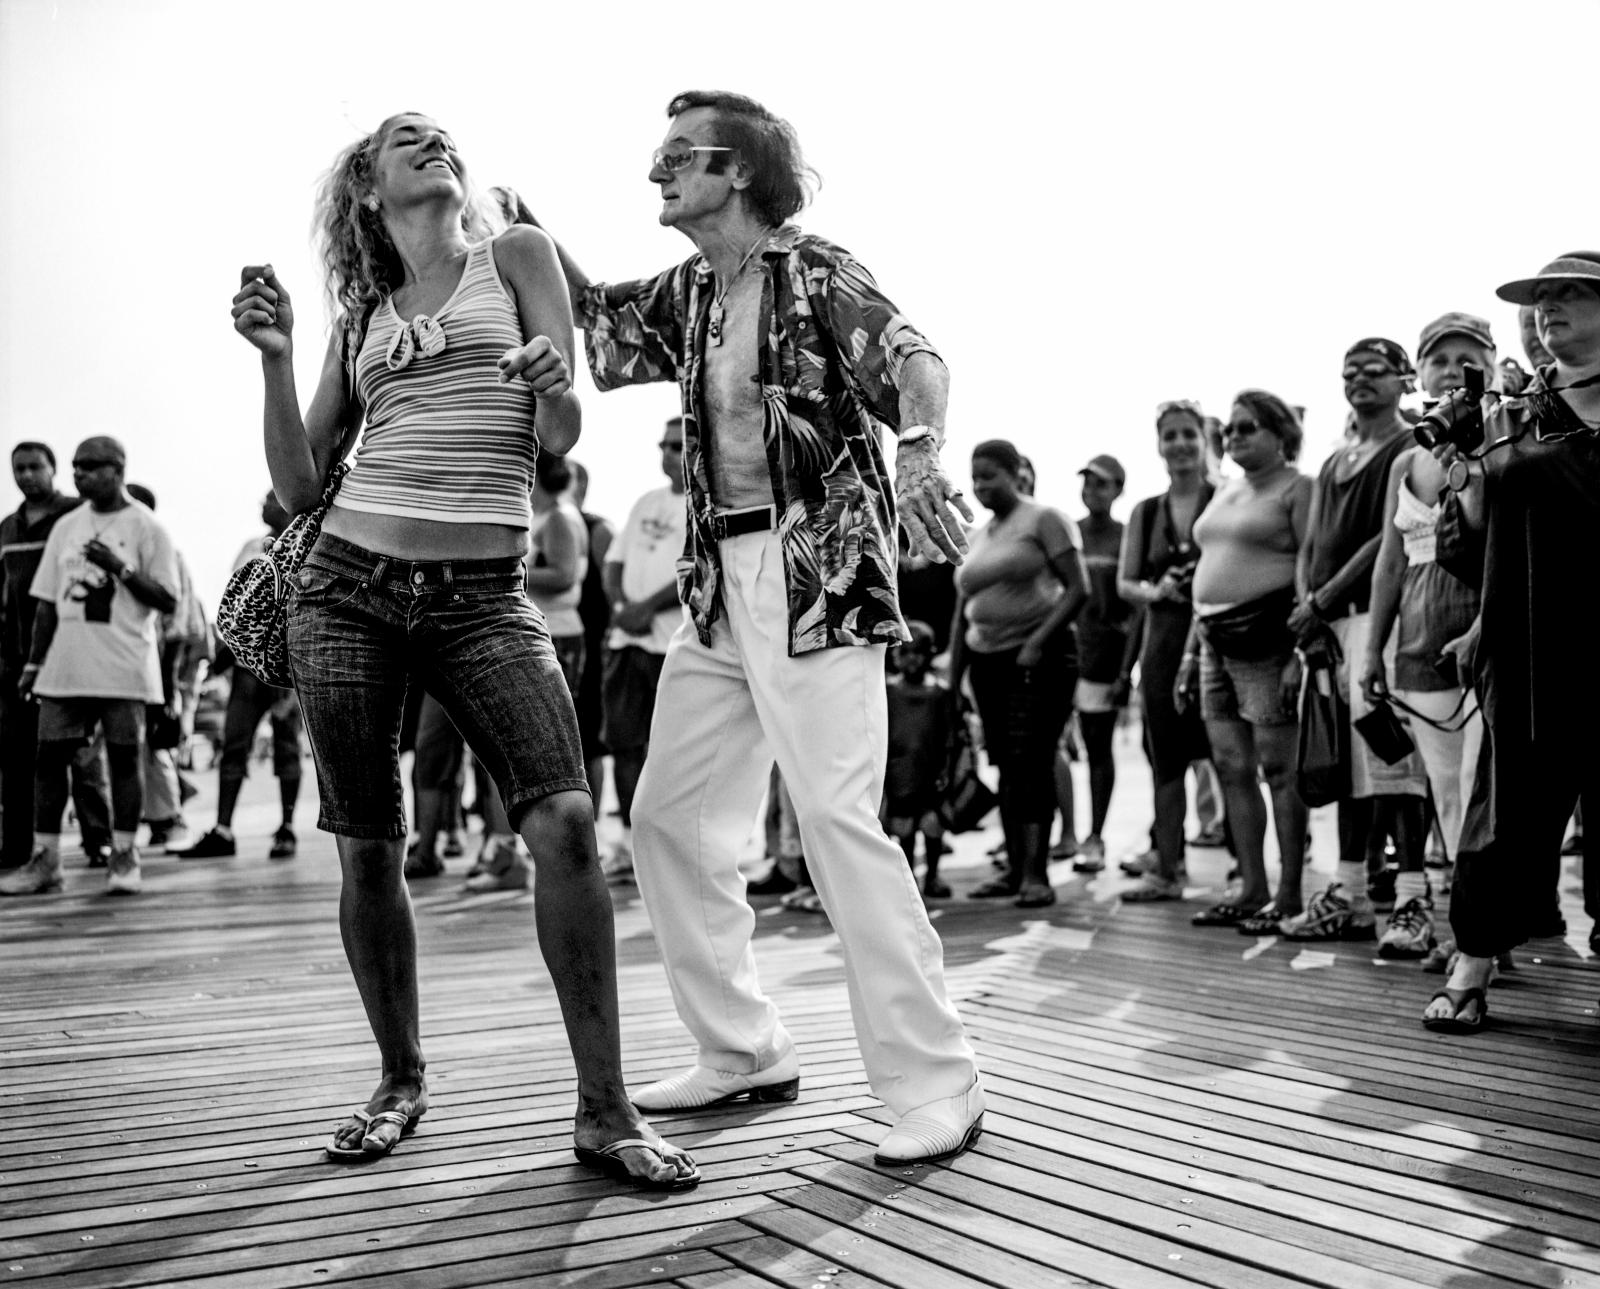 Tony Disco Dancing on the Coney Island Boardwalk